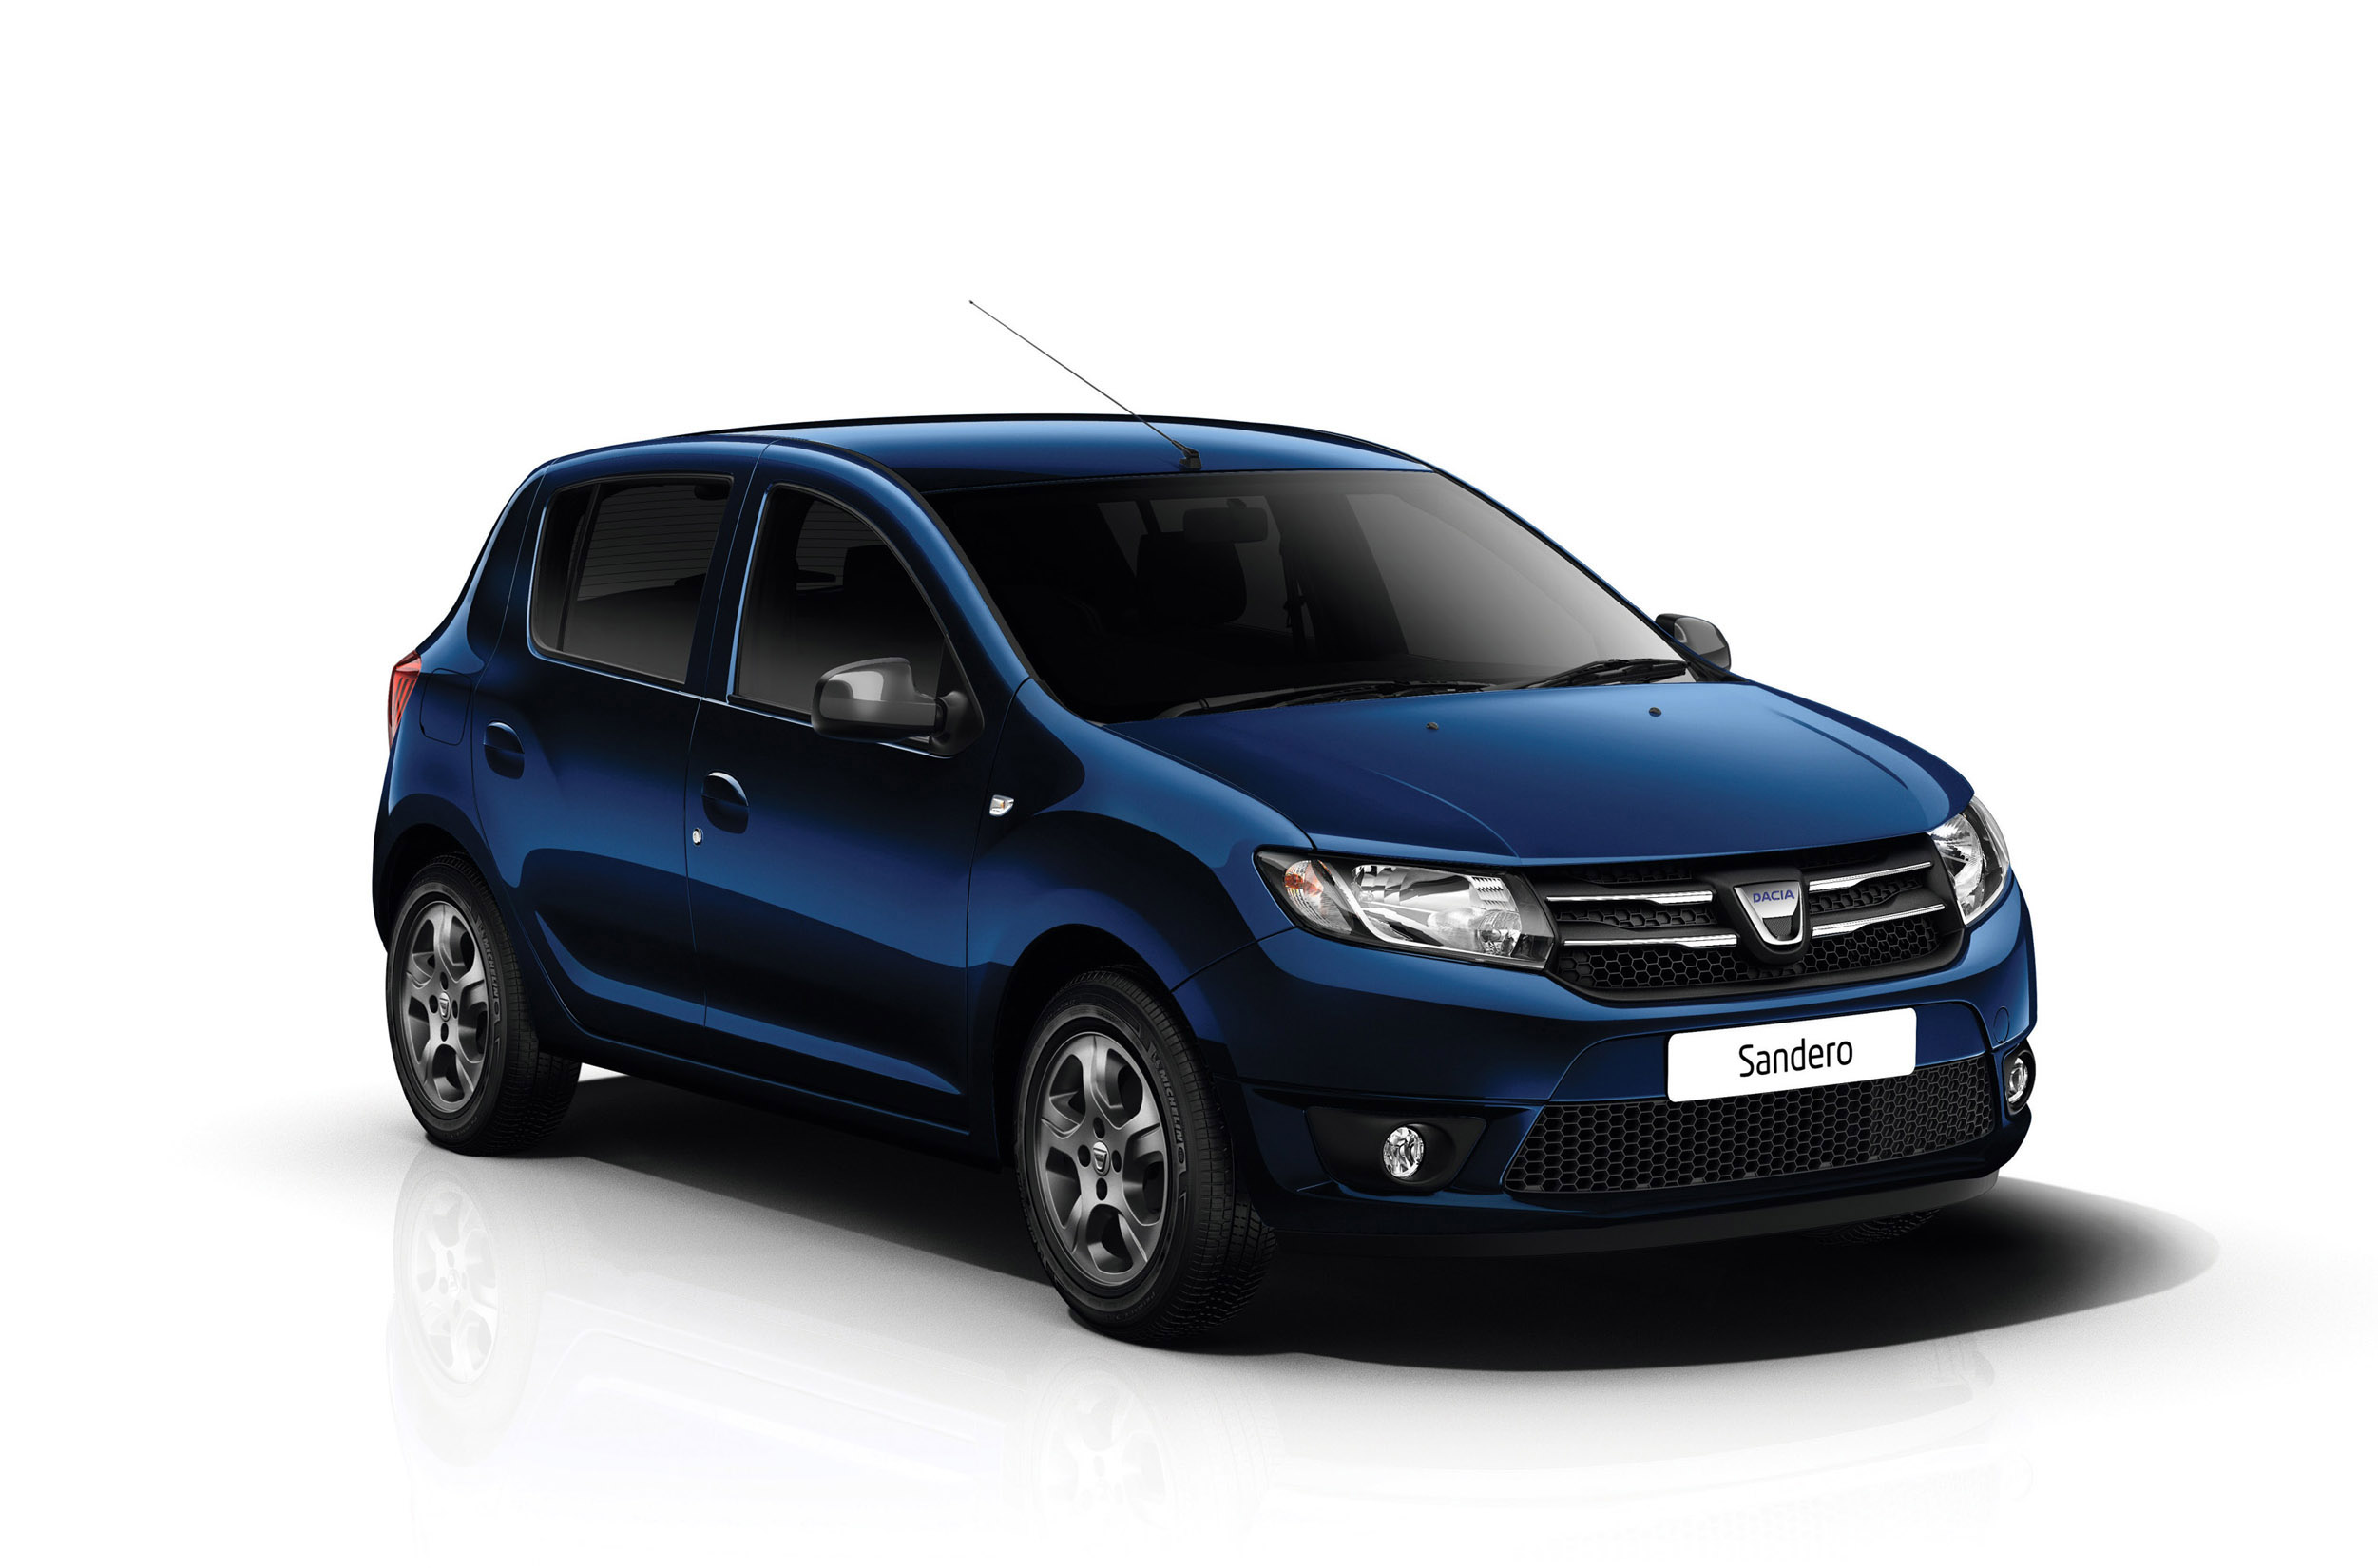 Dacia Anniversary Limited-Edition Range